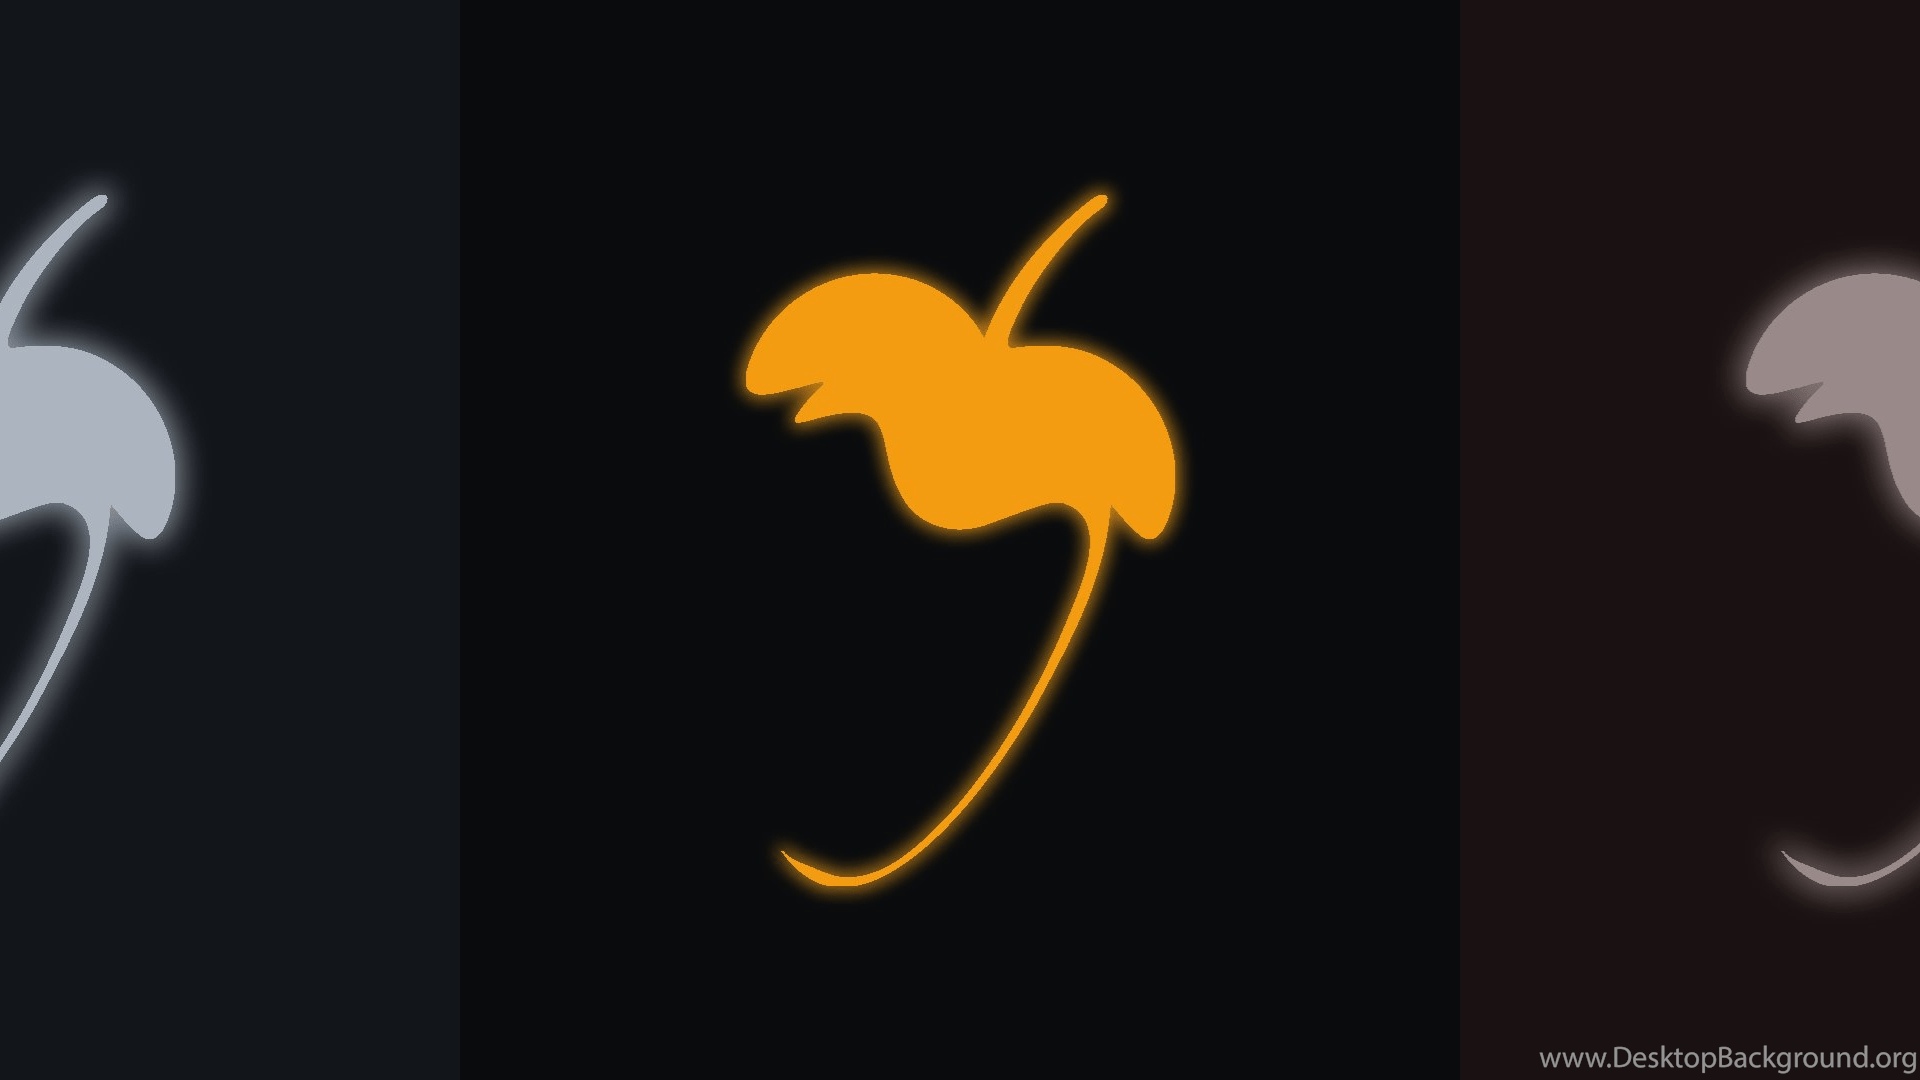 fl studio logo evolution